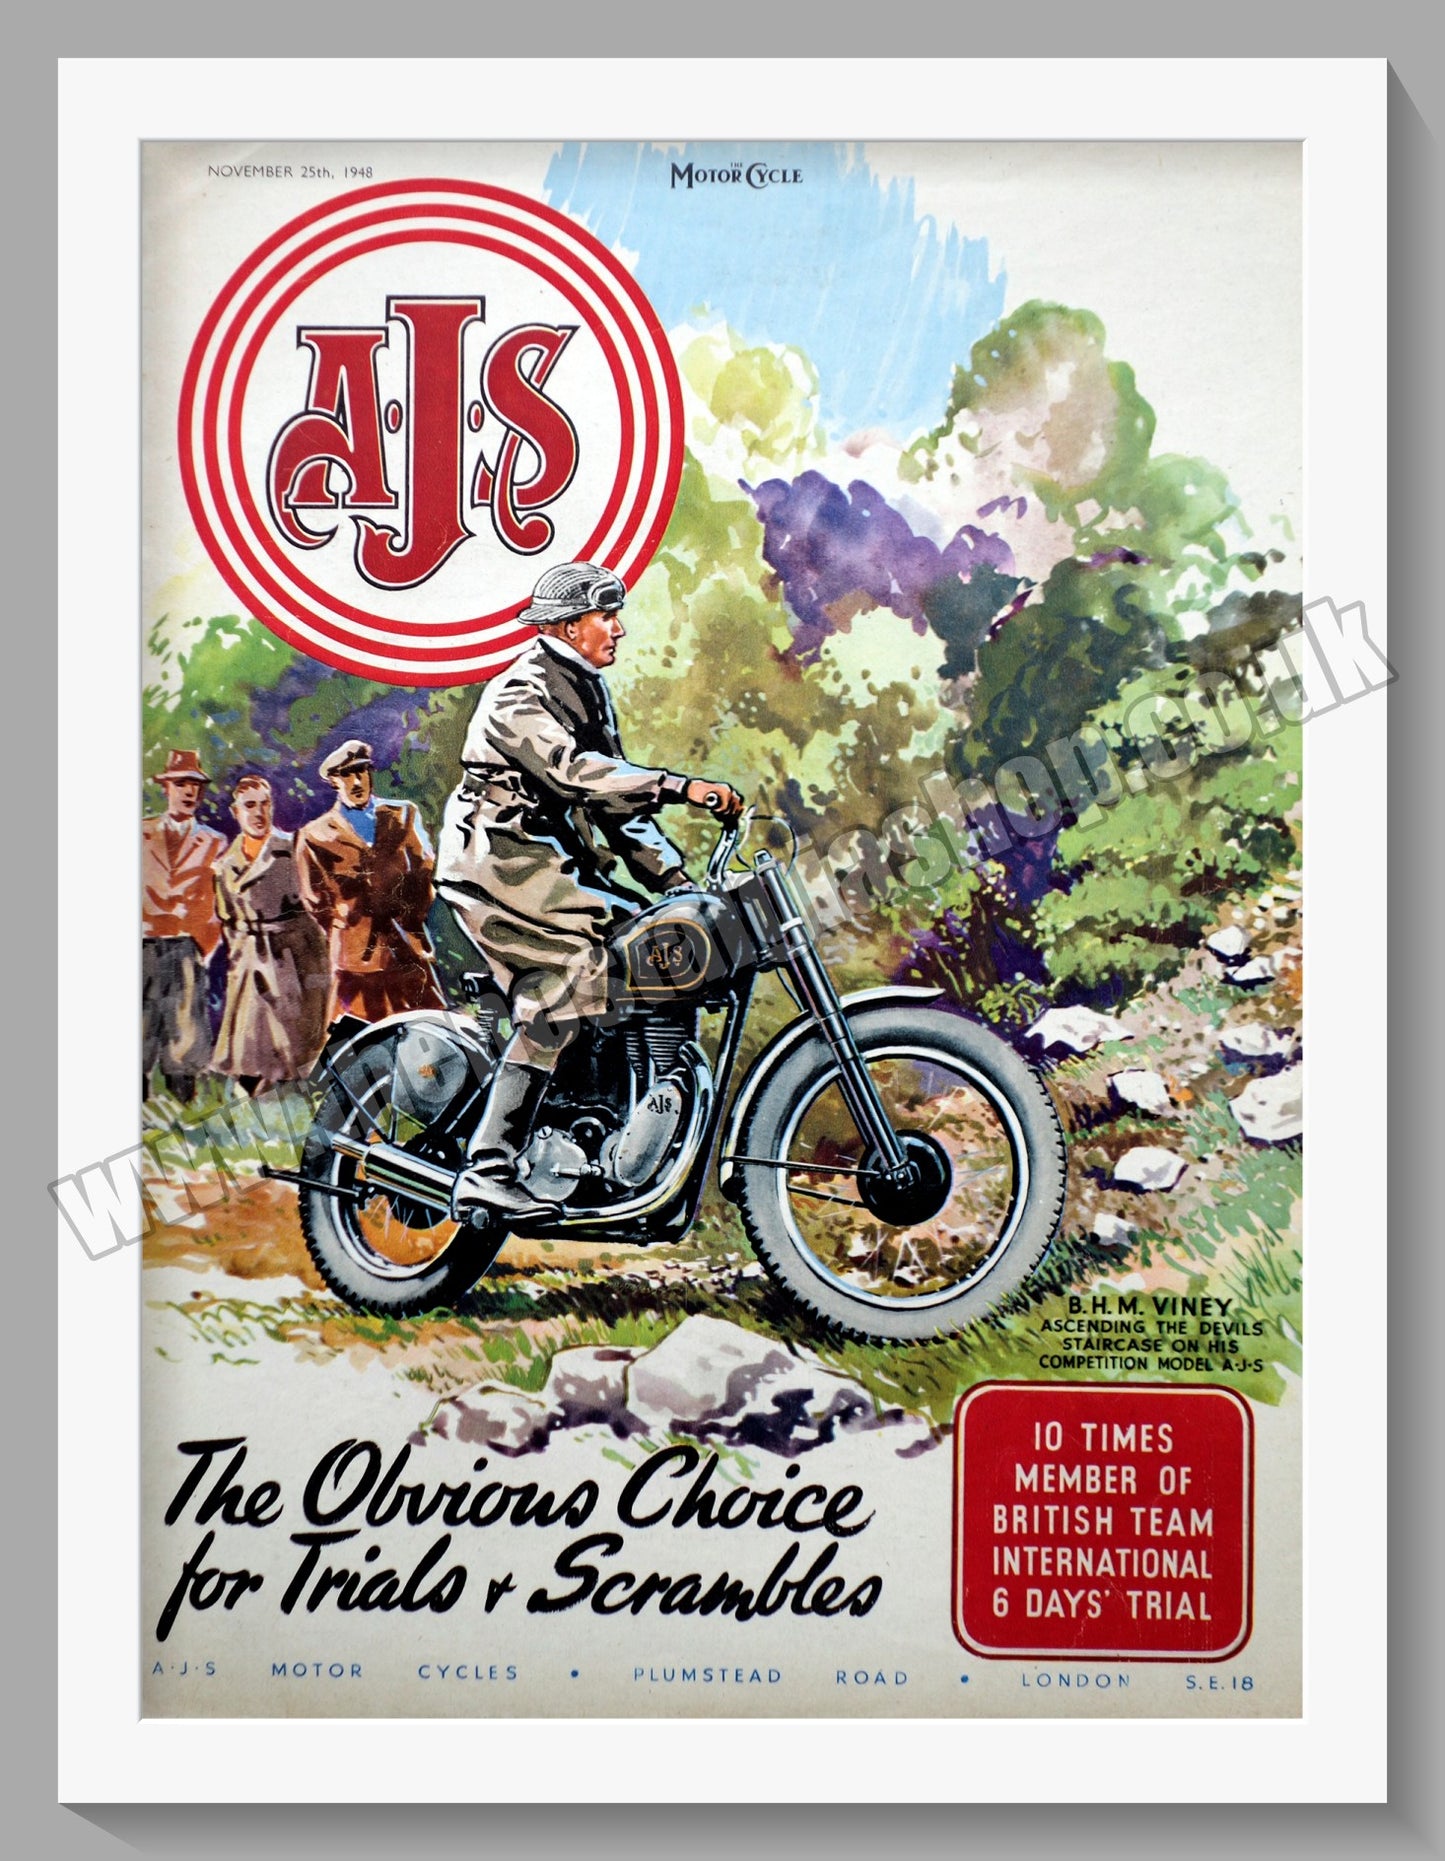 A.J.S Motorcycles for Trials and Scrambles. Original Advert 1948 (ref AD56872)